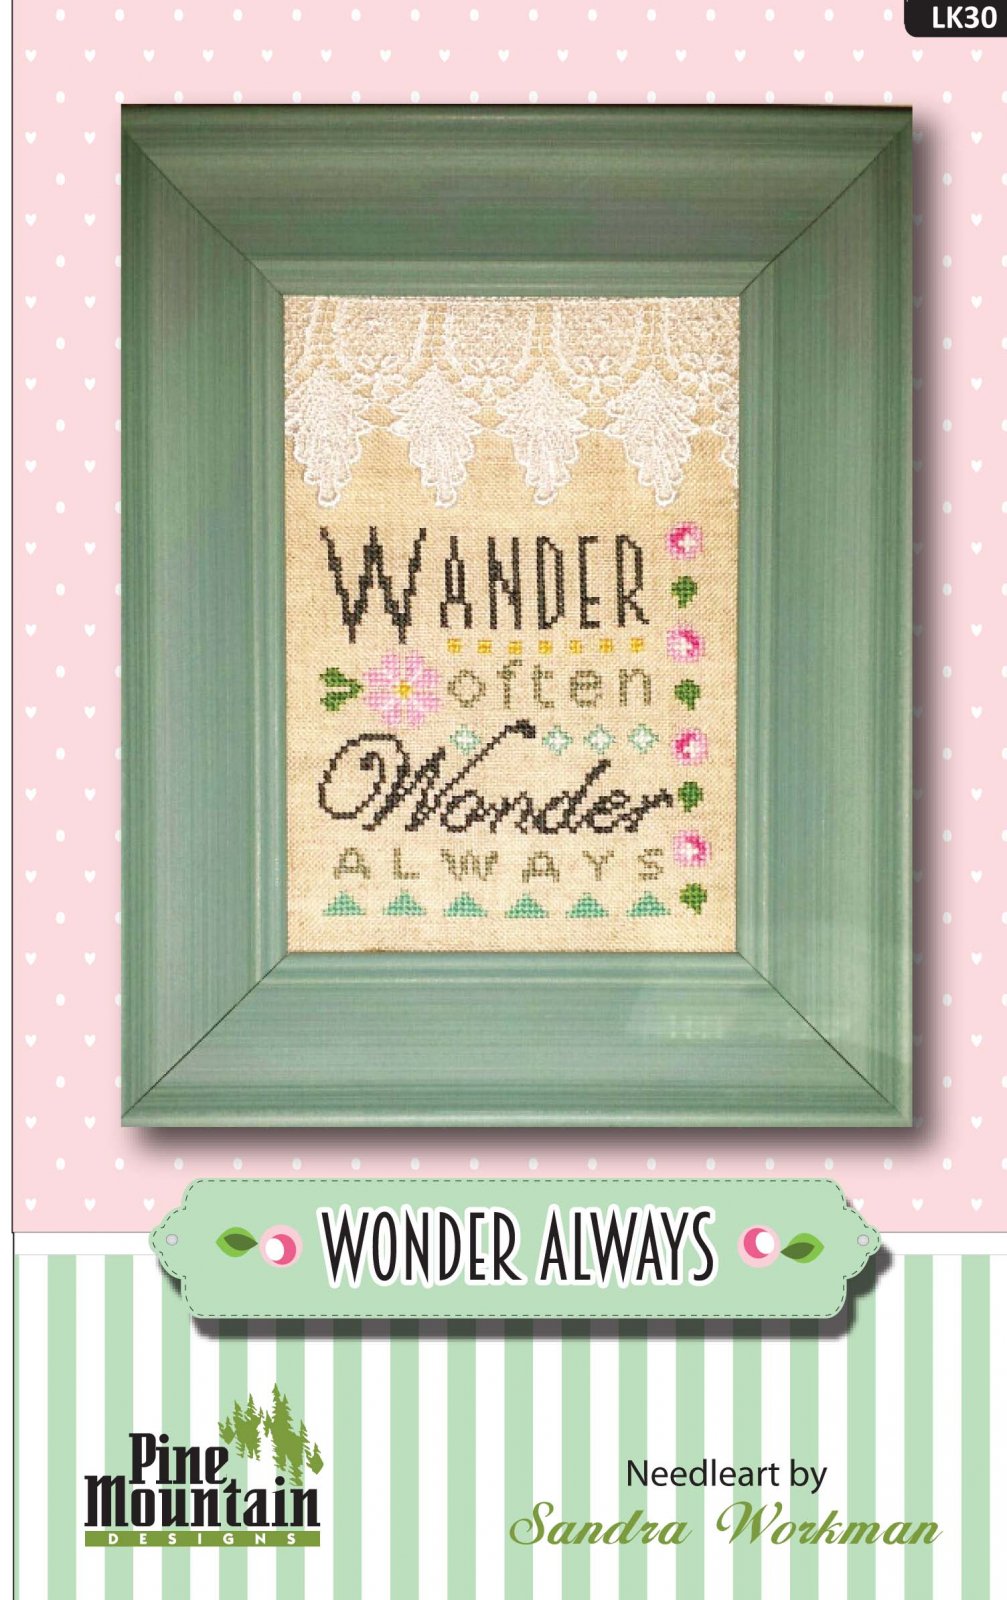 PMD - Words of Wisdom: Wonder Always